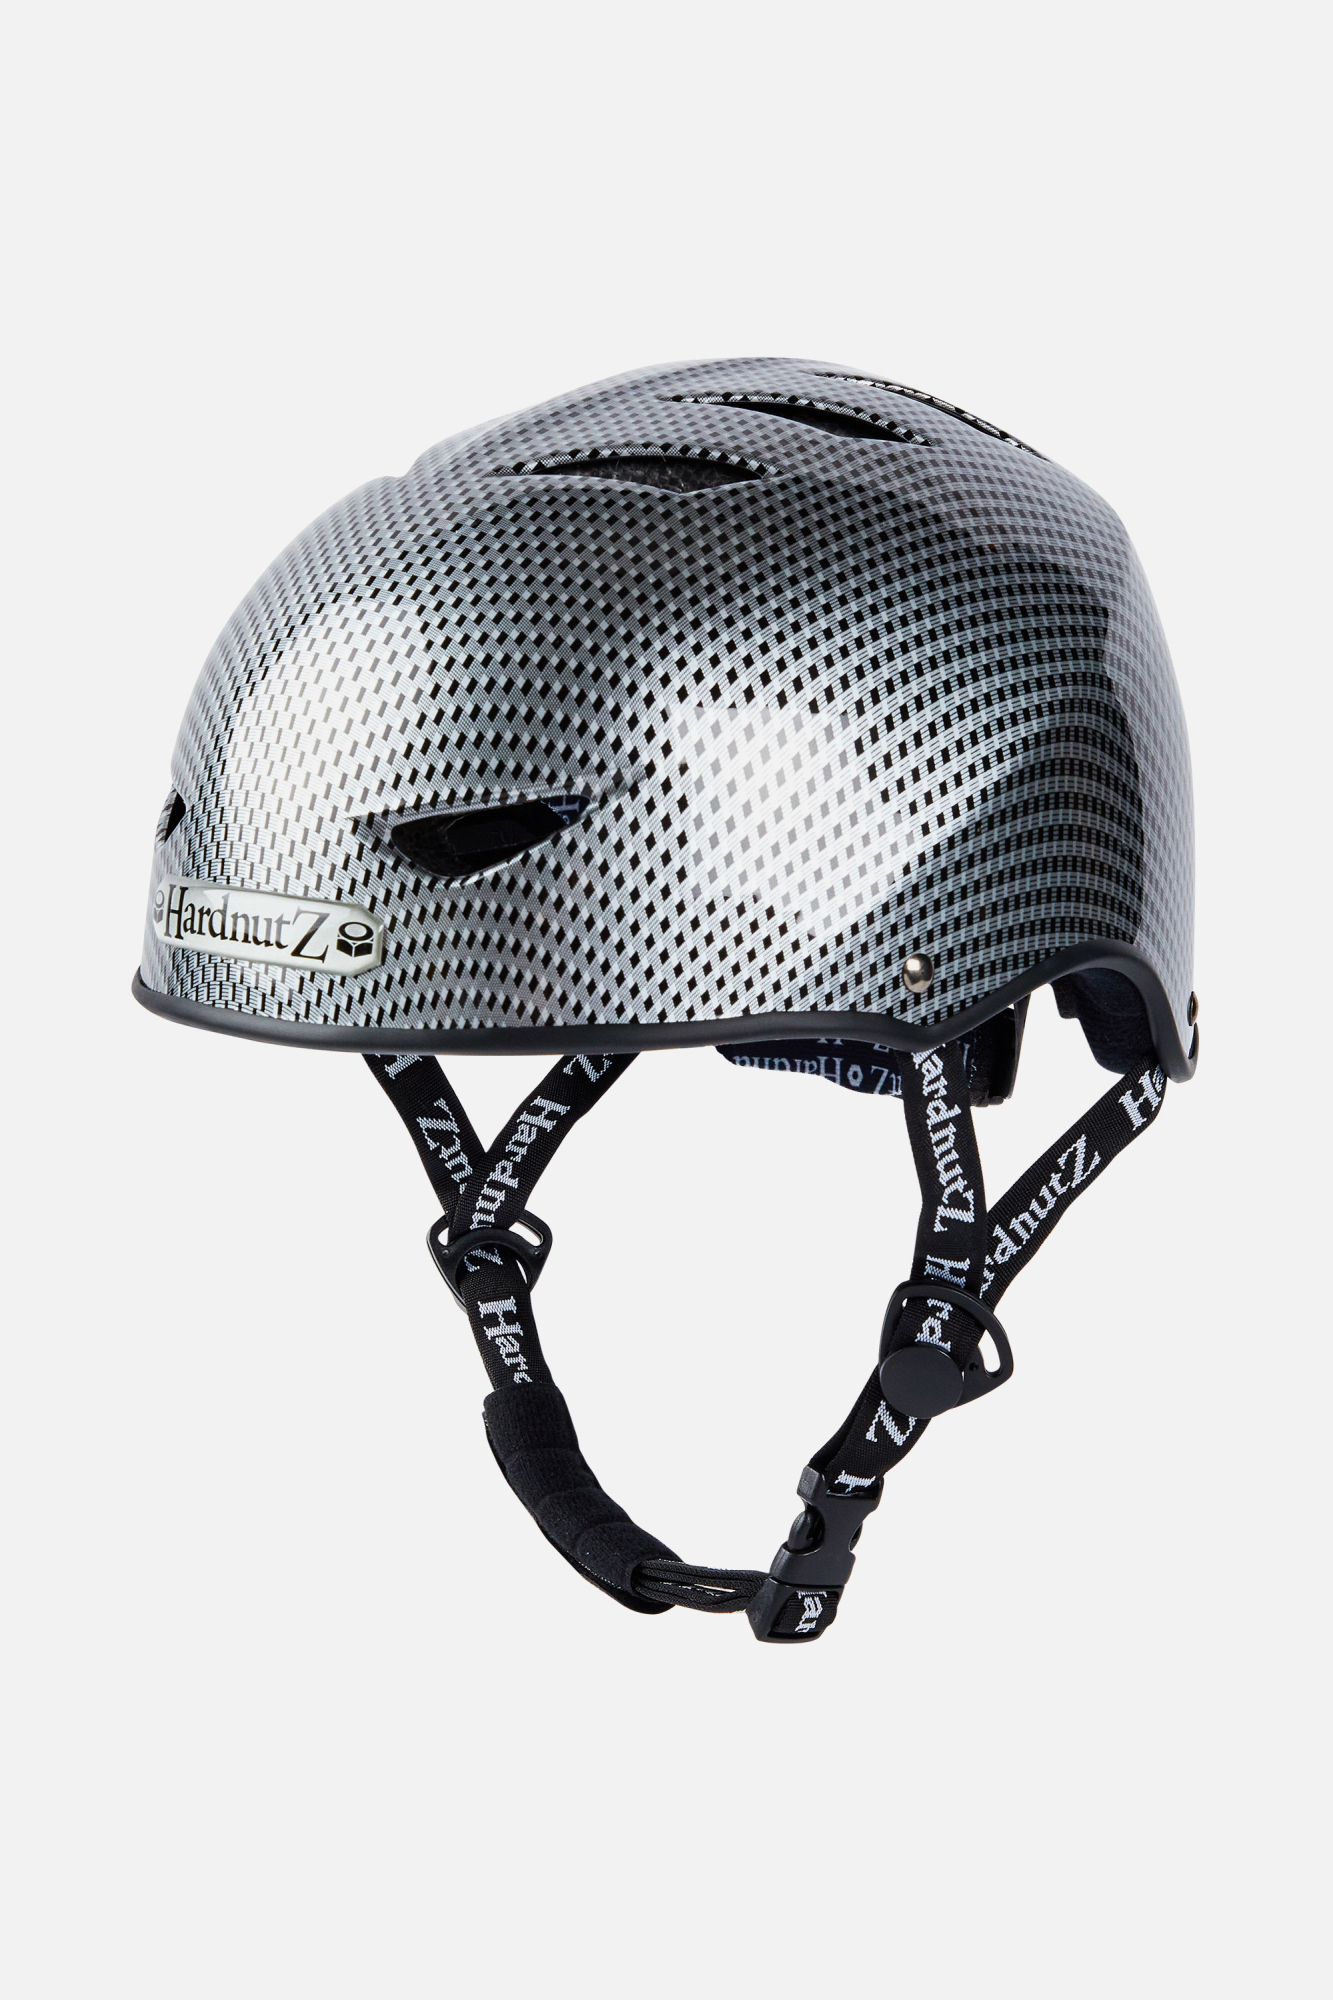 Hardnutz Unisex Street Helmet Black - Size: Medium